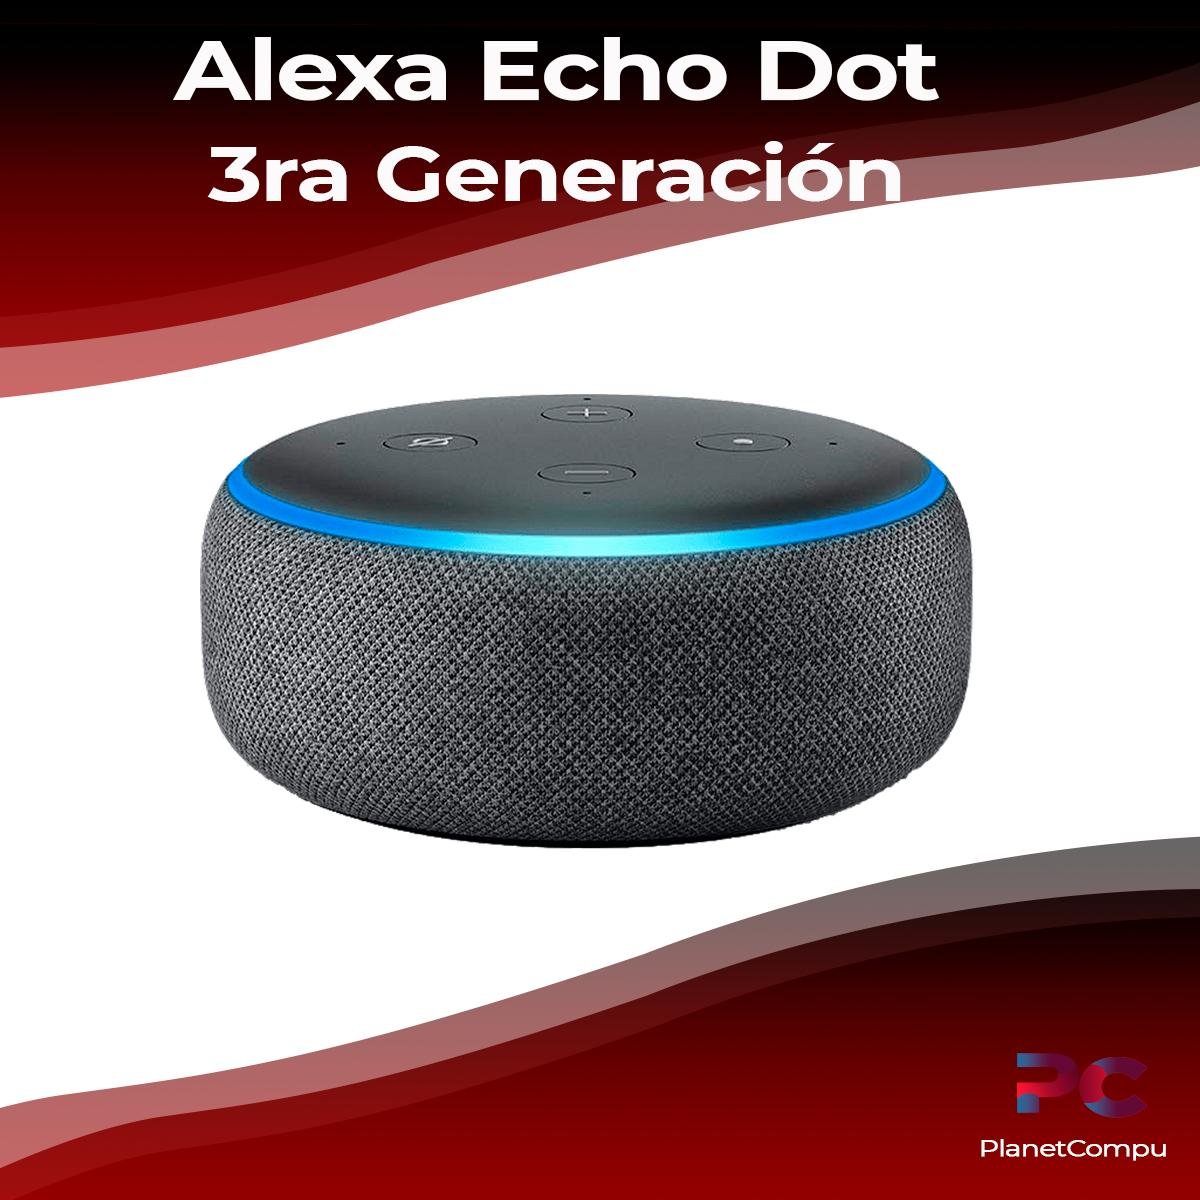 Alexa Echo Dot 5ta generación con reloj – PlanetCompu – componentes de PC